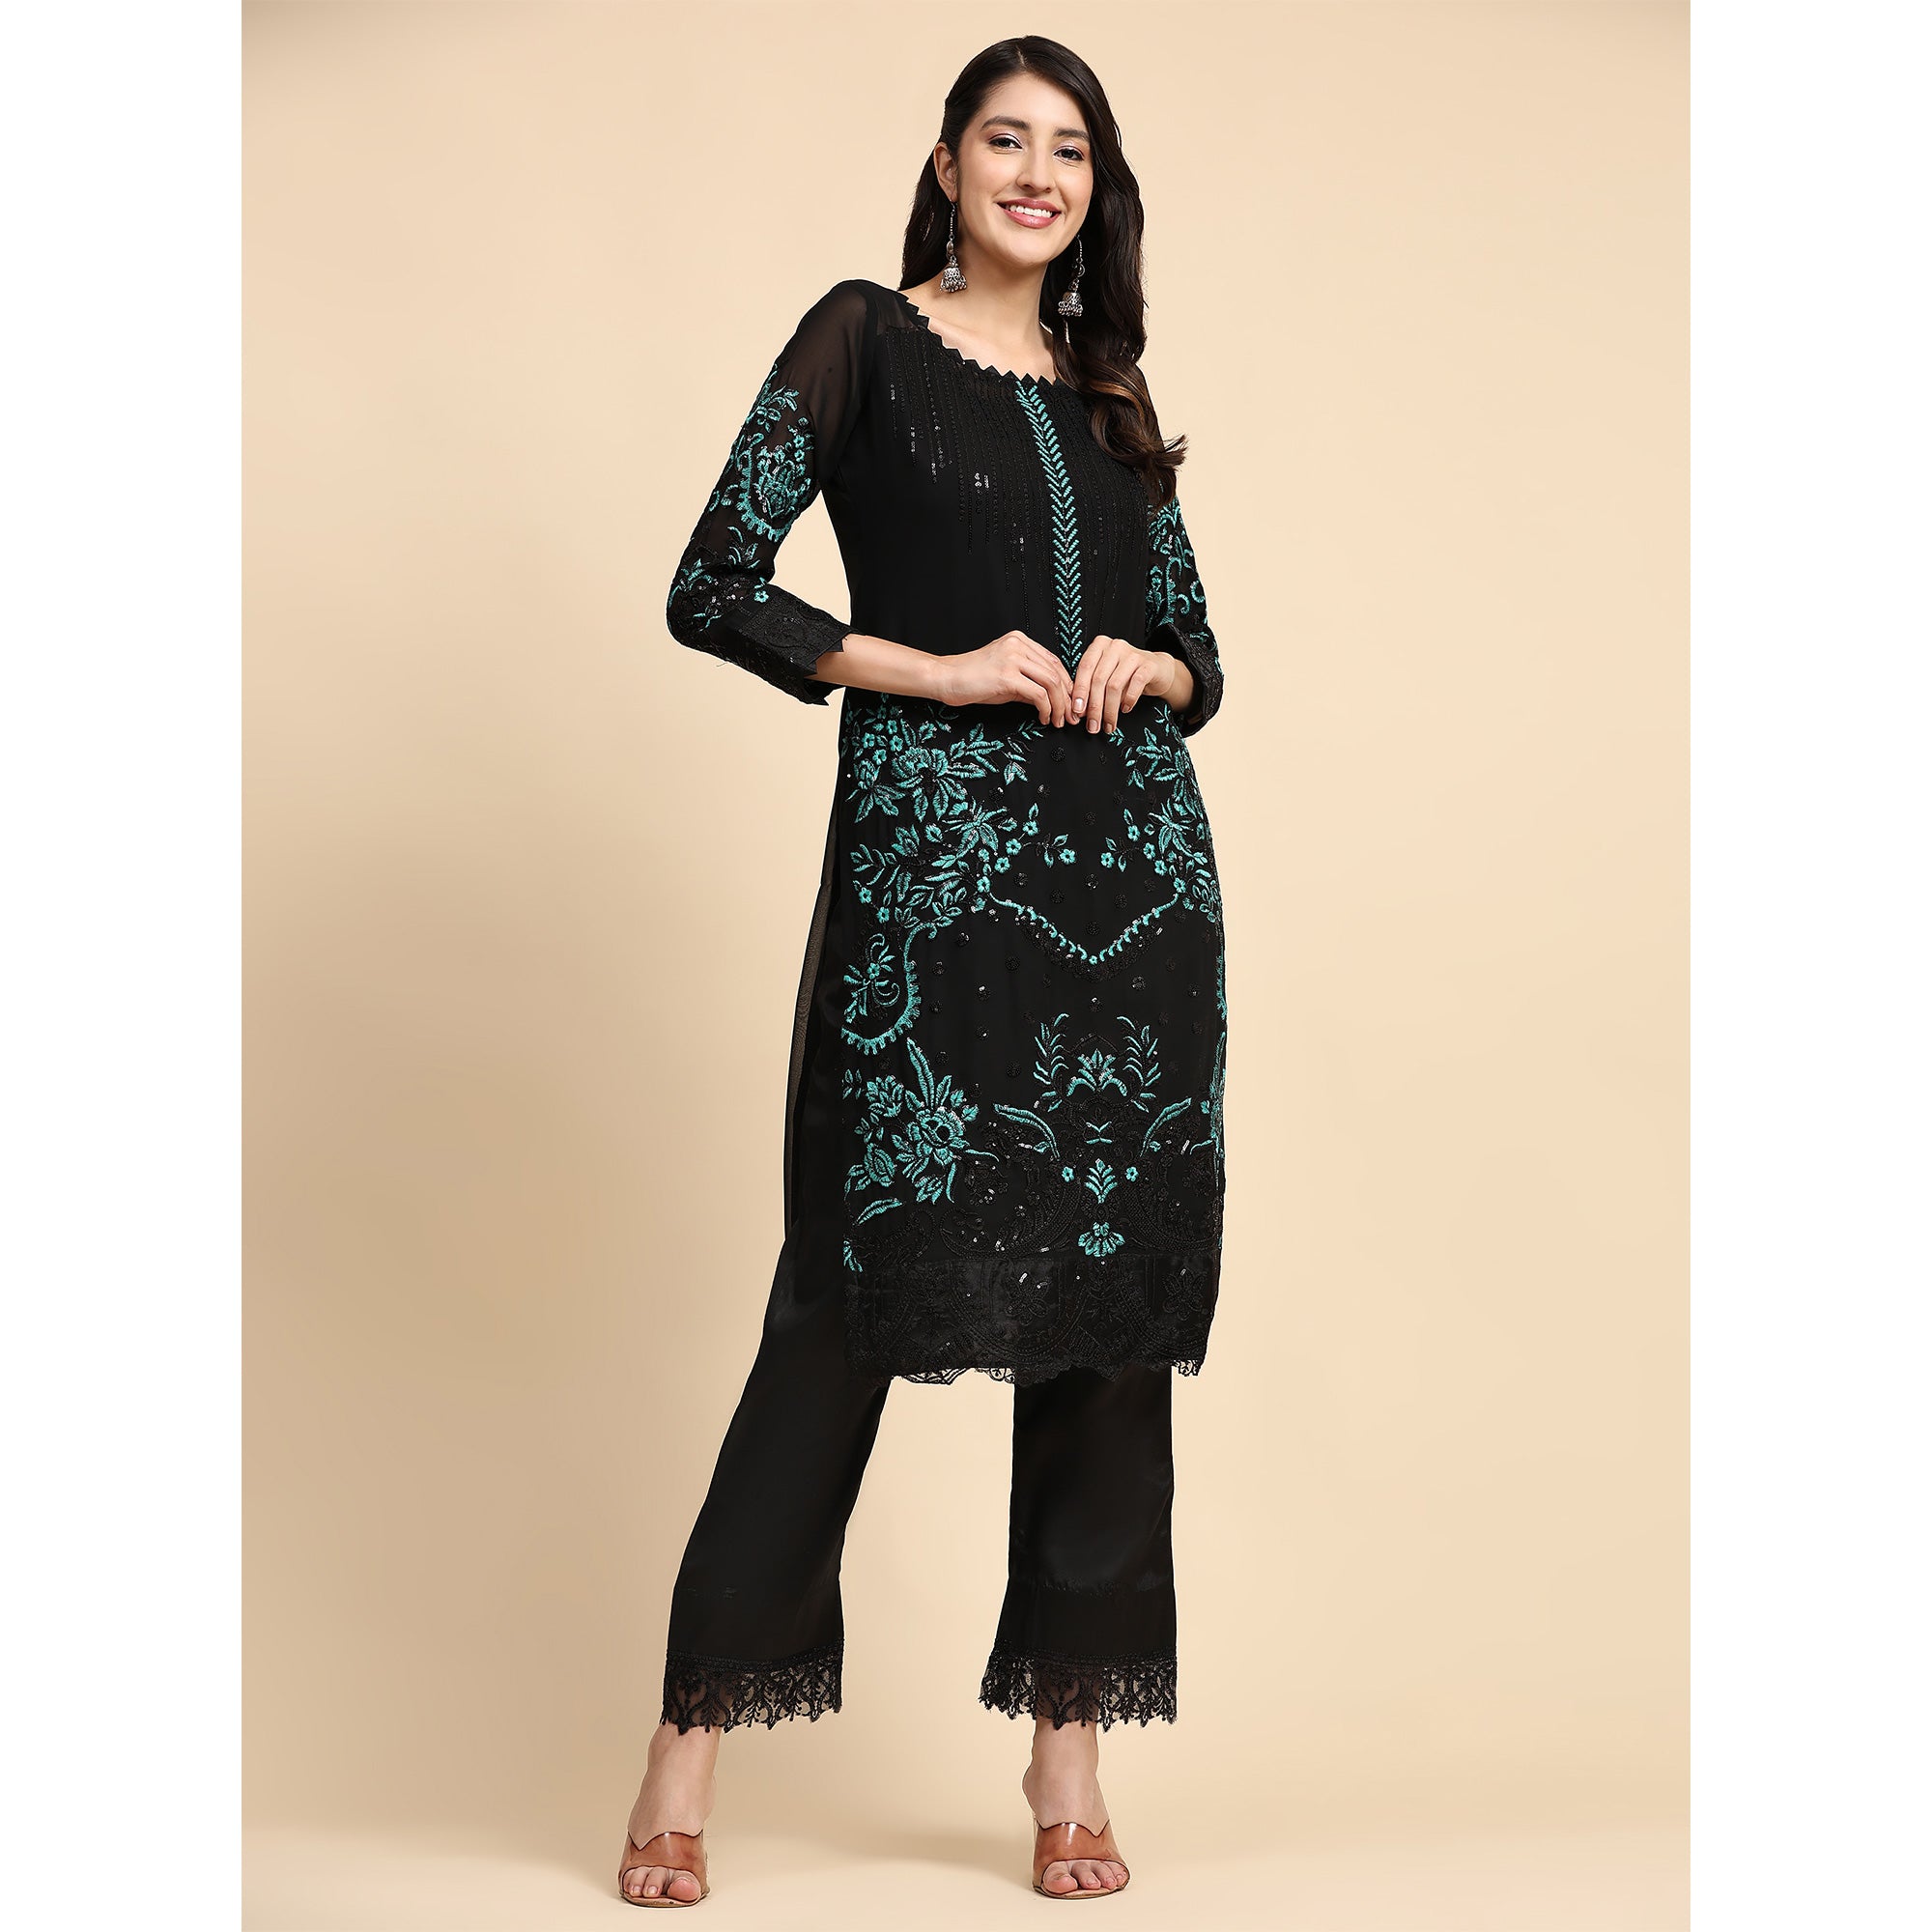 Black & Blue Floral Embroidered Georgette Semi Stitched Pakistani Suit